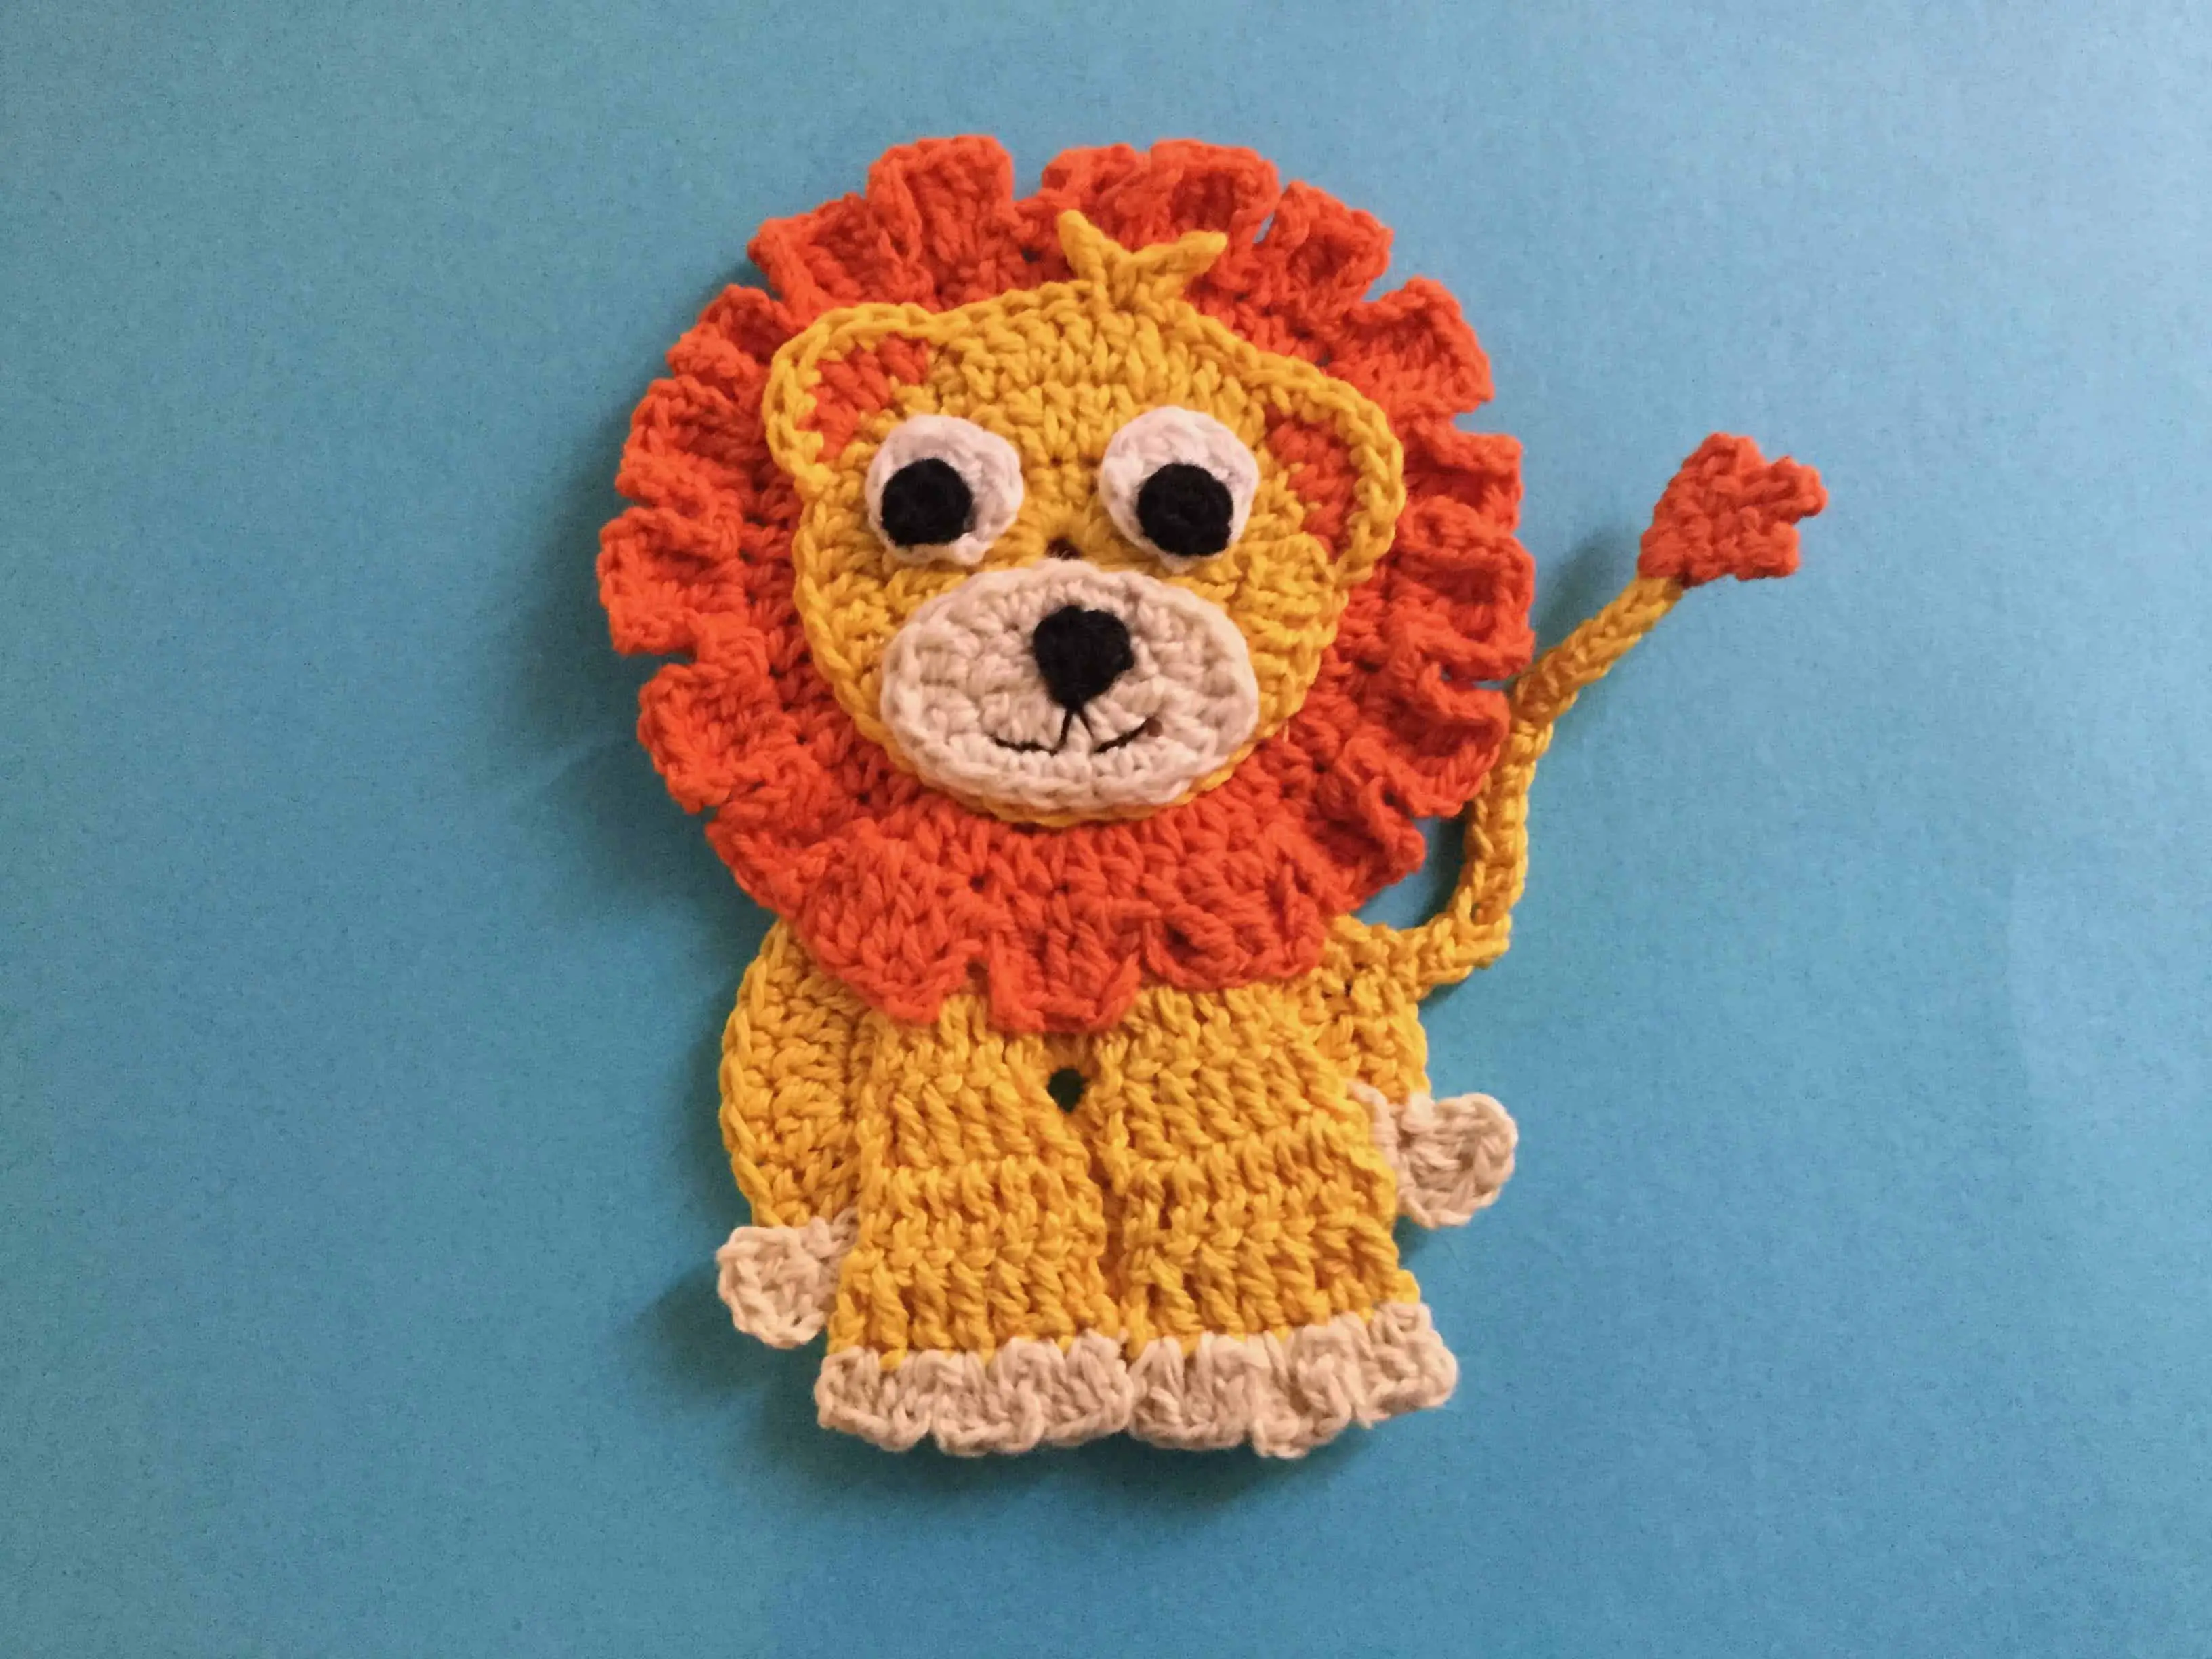 Finished crochet sitting lion landscape